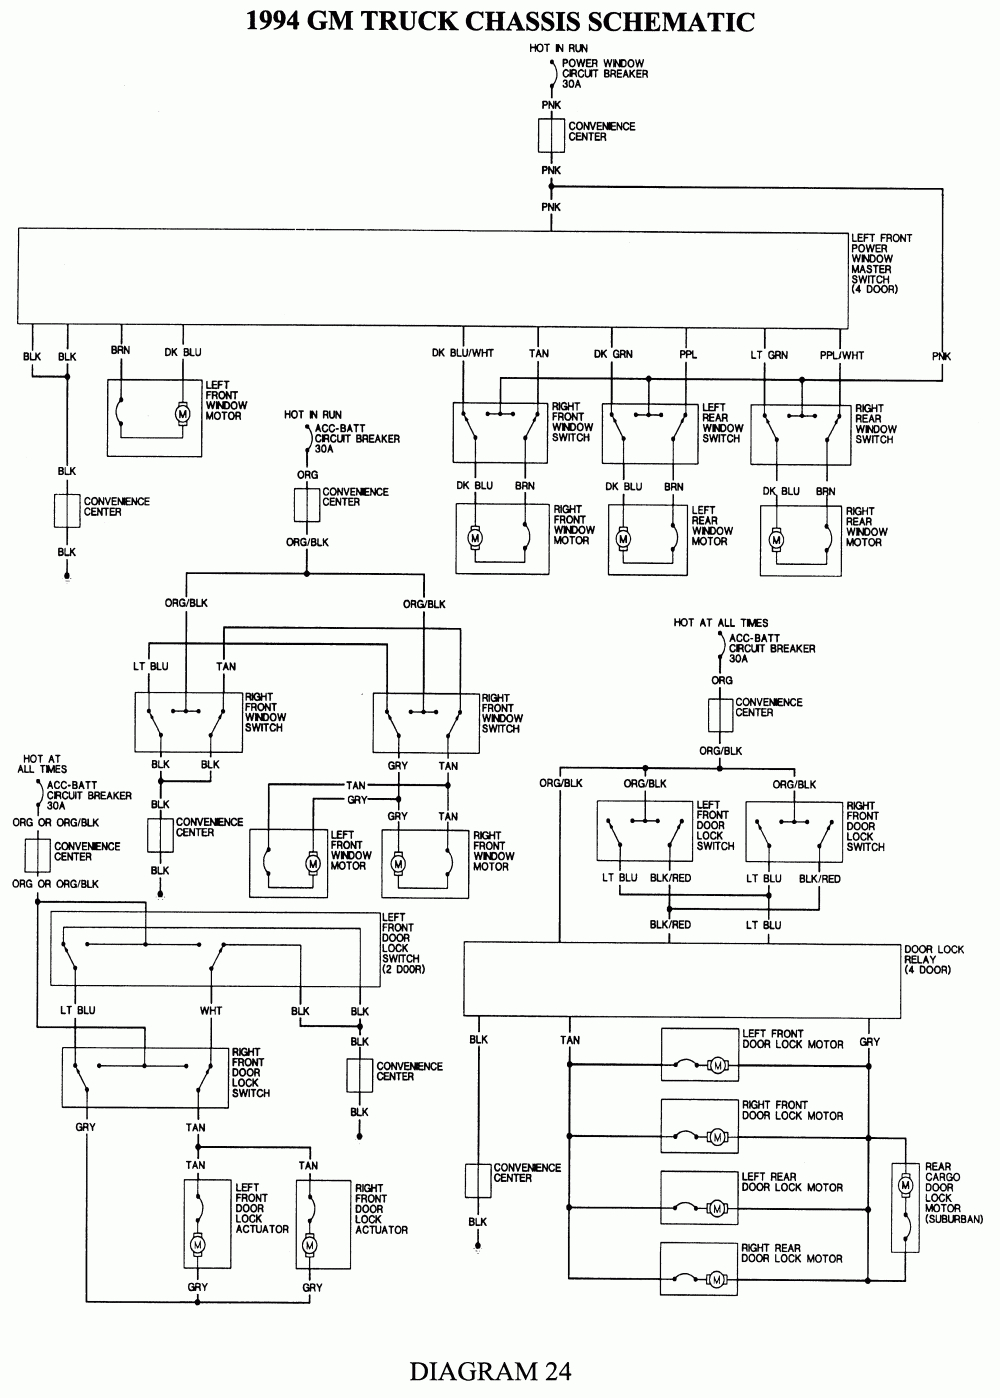 2003 Chevy 7 Pin Wiring Harness Diagram | Wiring Diagram - 2003 Chevy Silverado Wiring Diagram